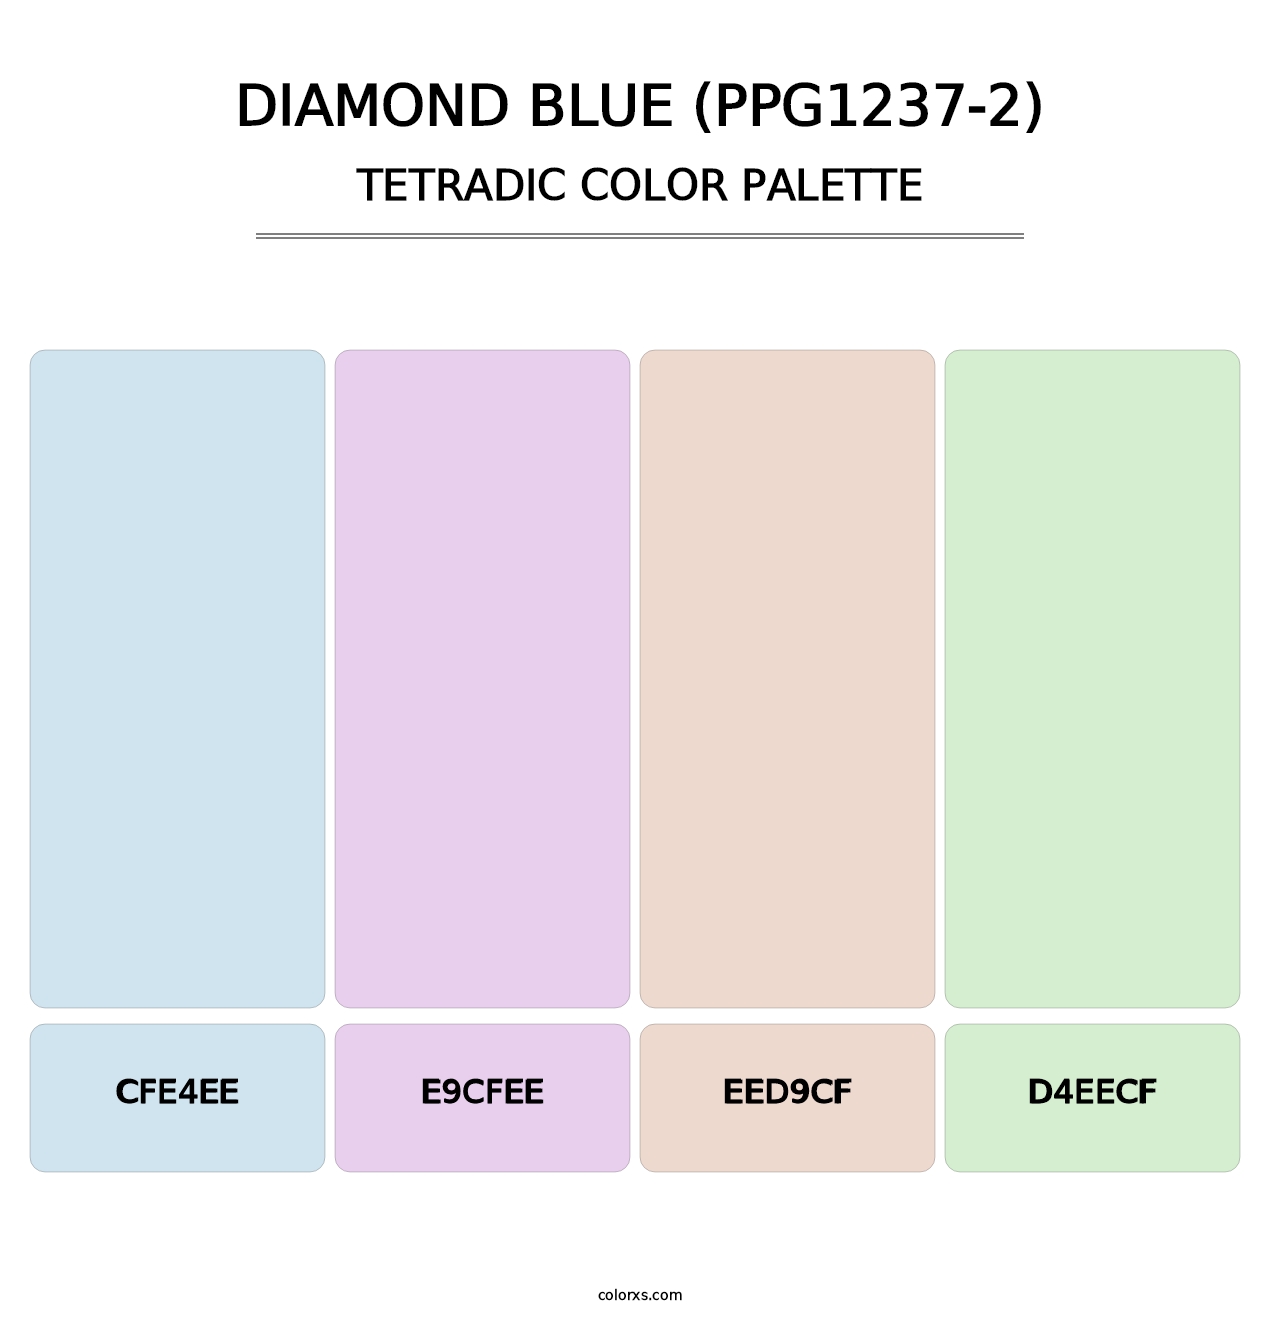 Diamond Blue (PPG1237-2) - Tetradic Color Palette